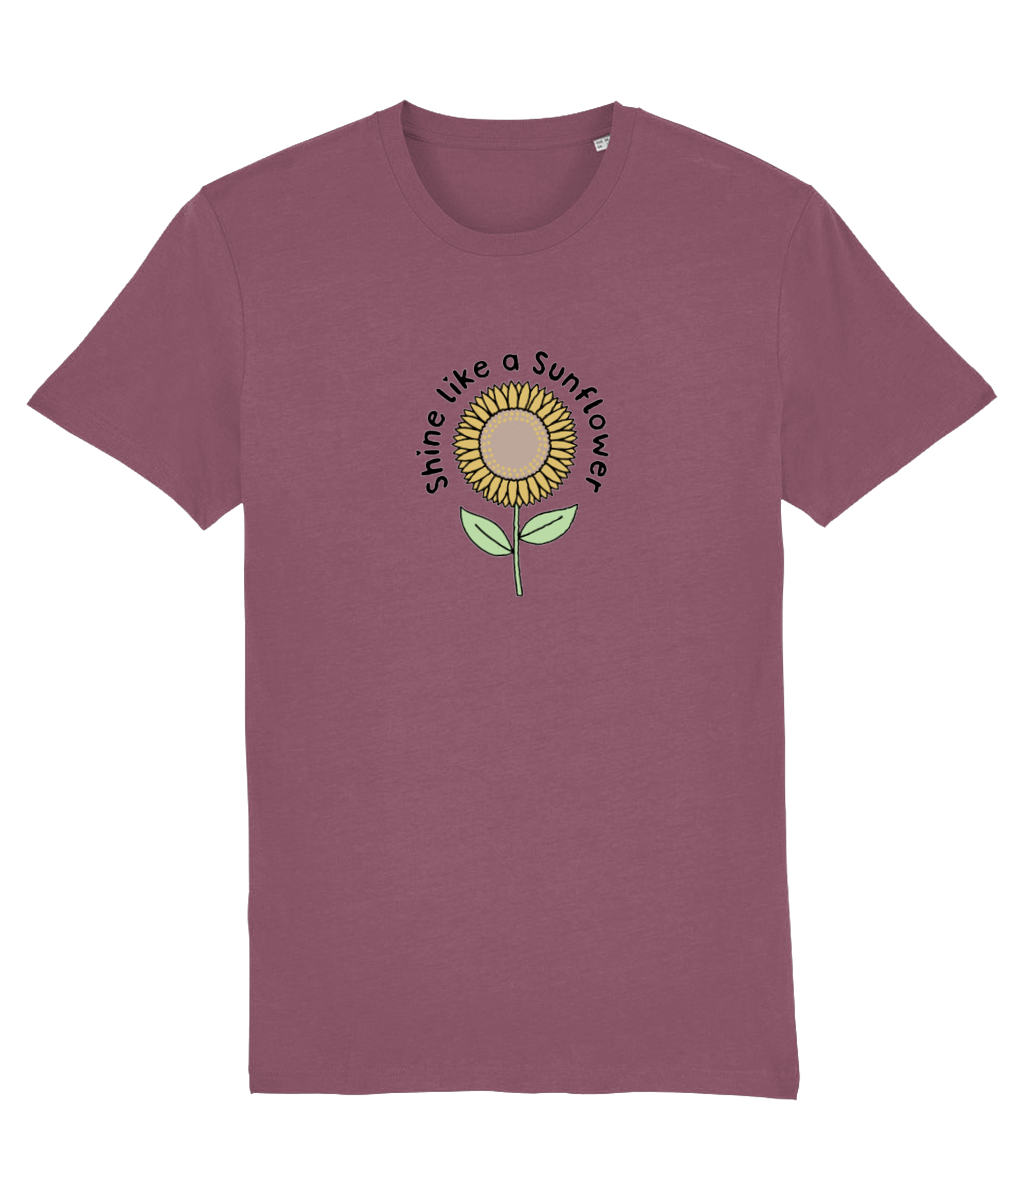 Shine Like A Sunflower - Adult T- Shirt - Light Multi Colour Available